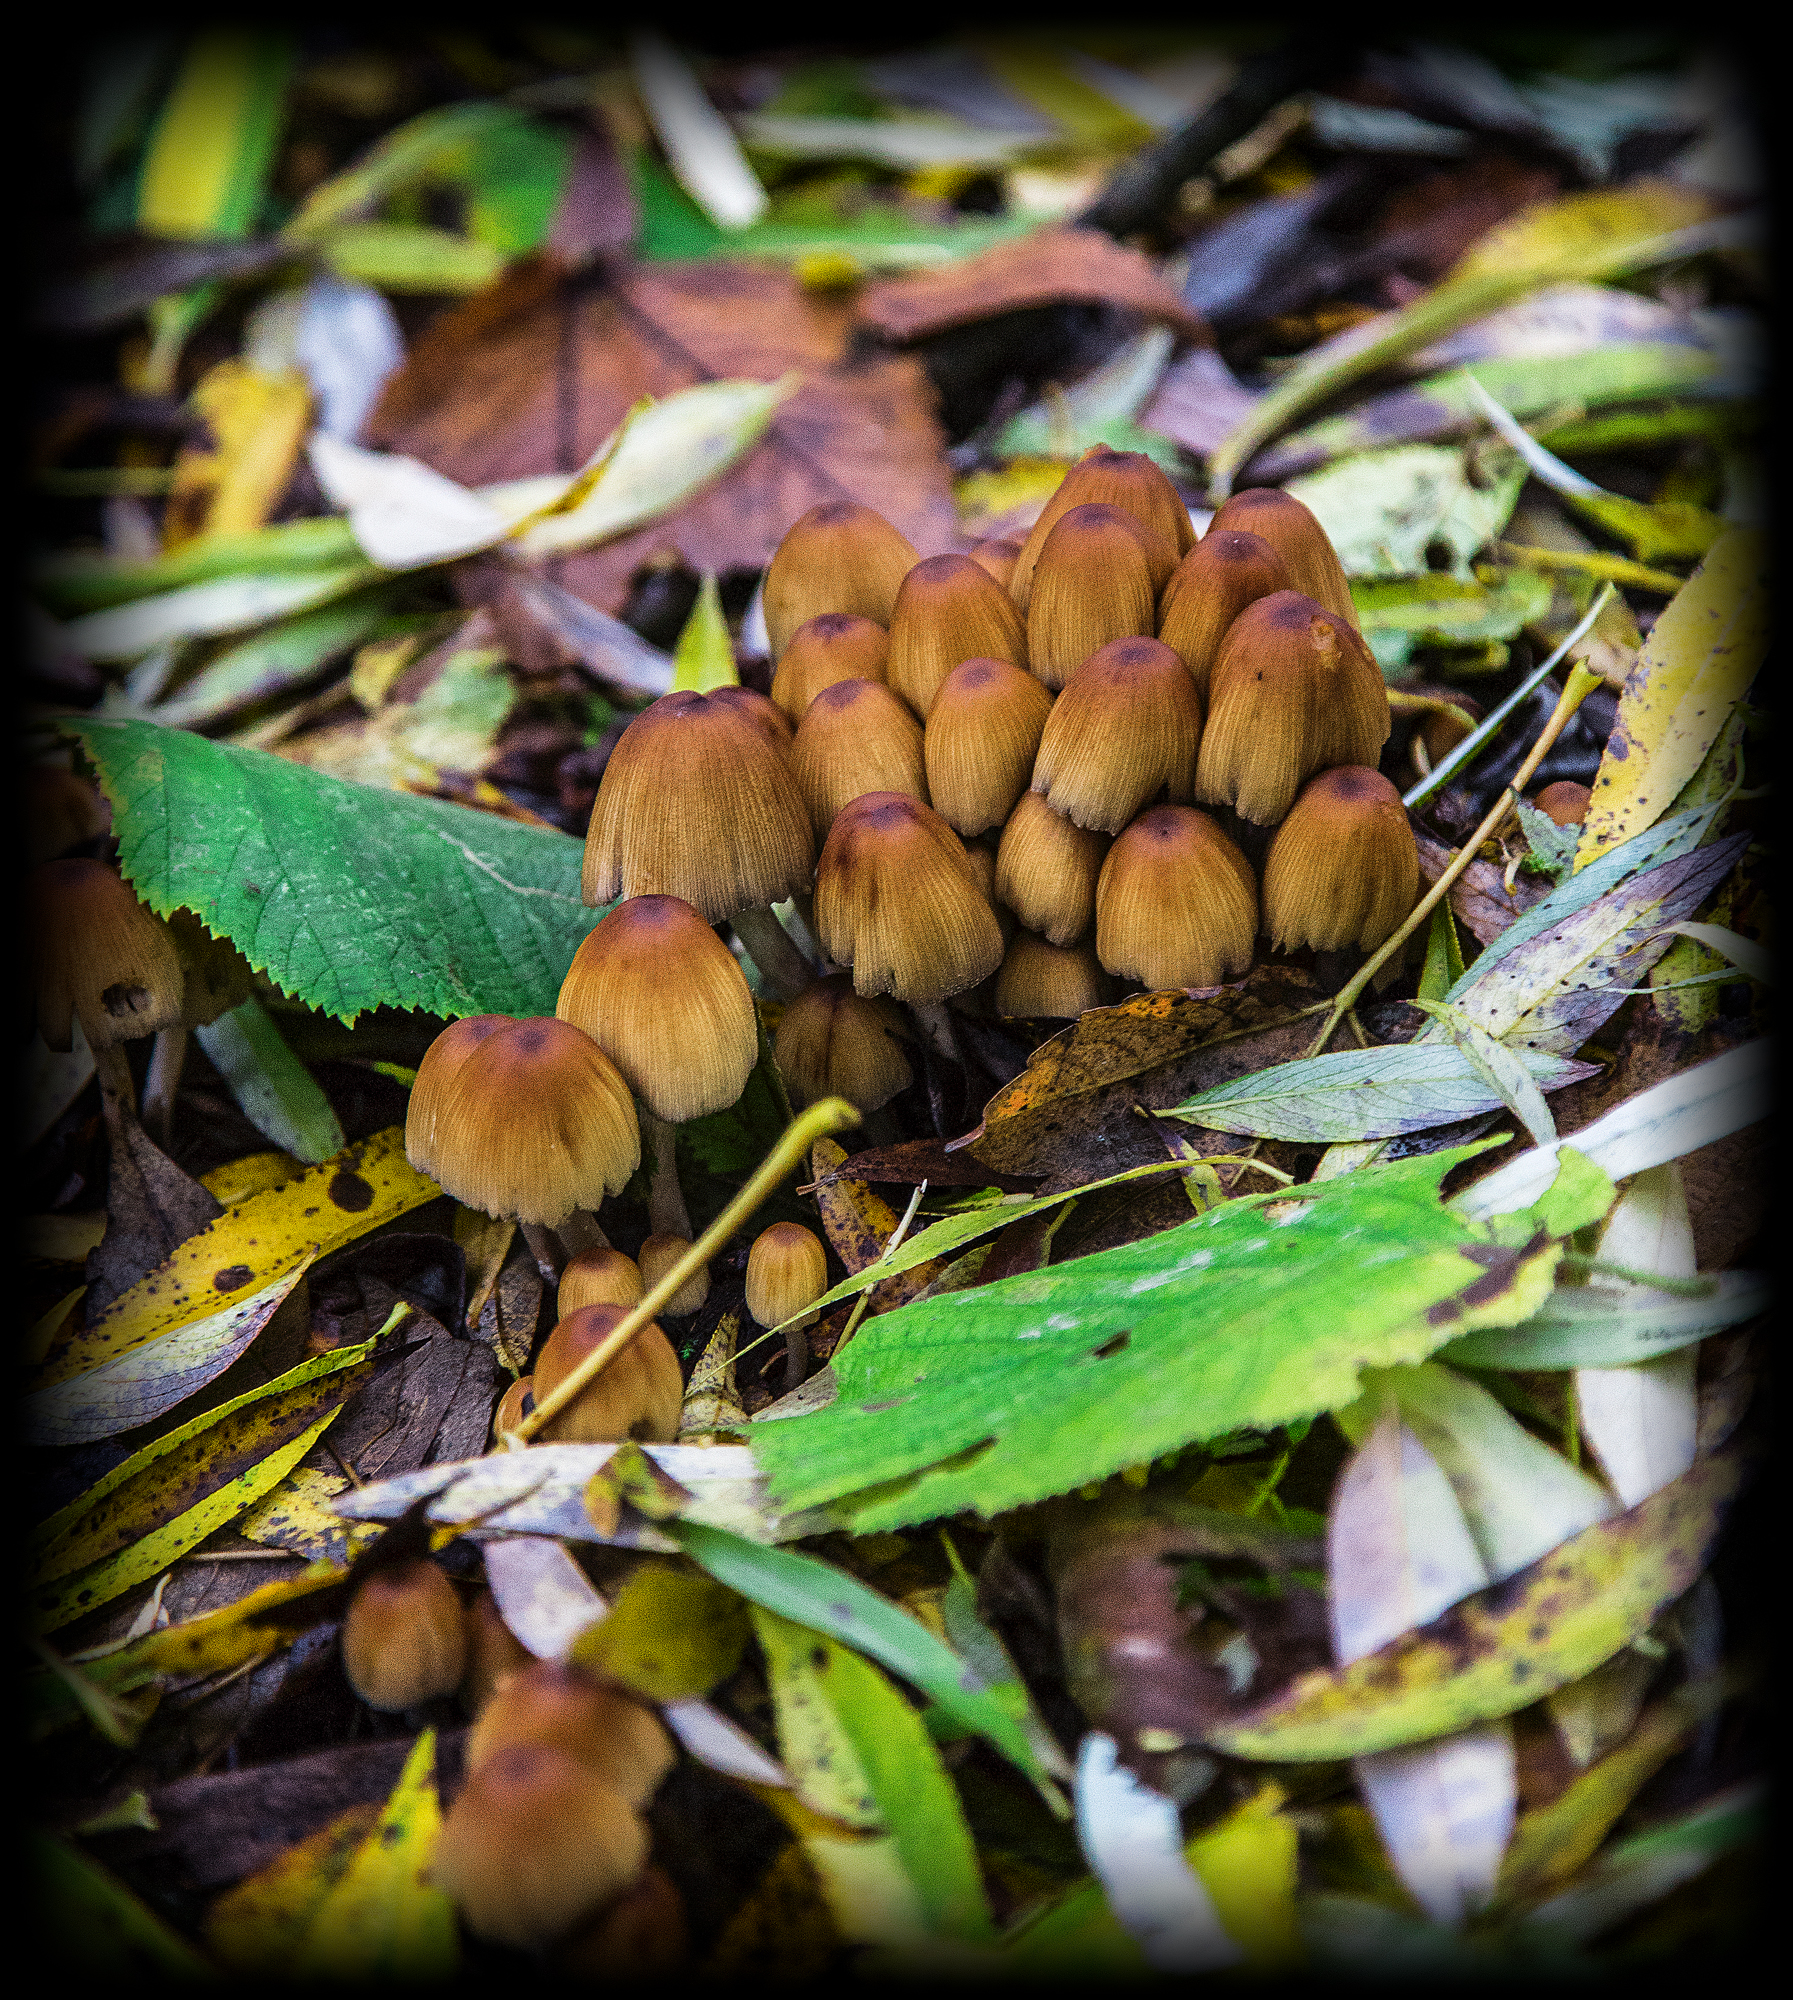 The Fungi